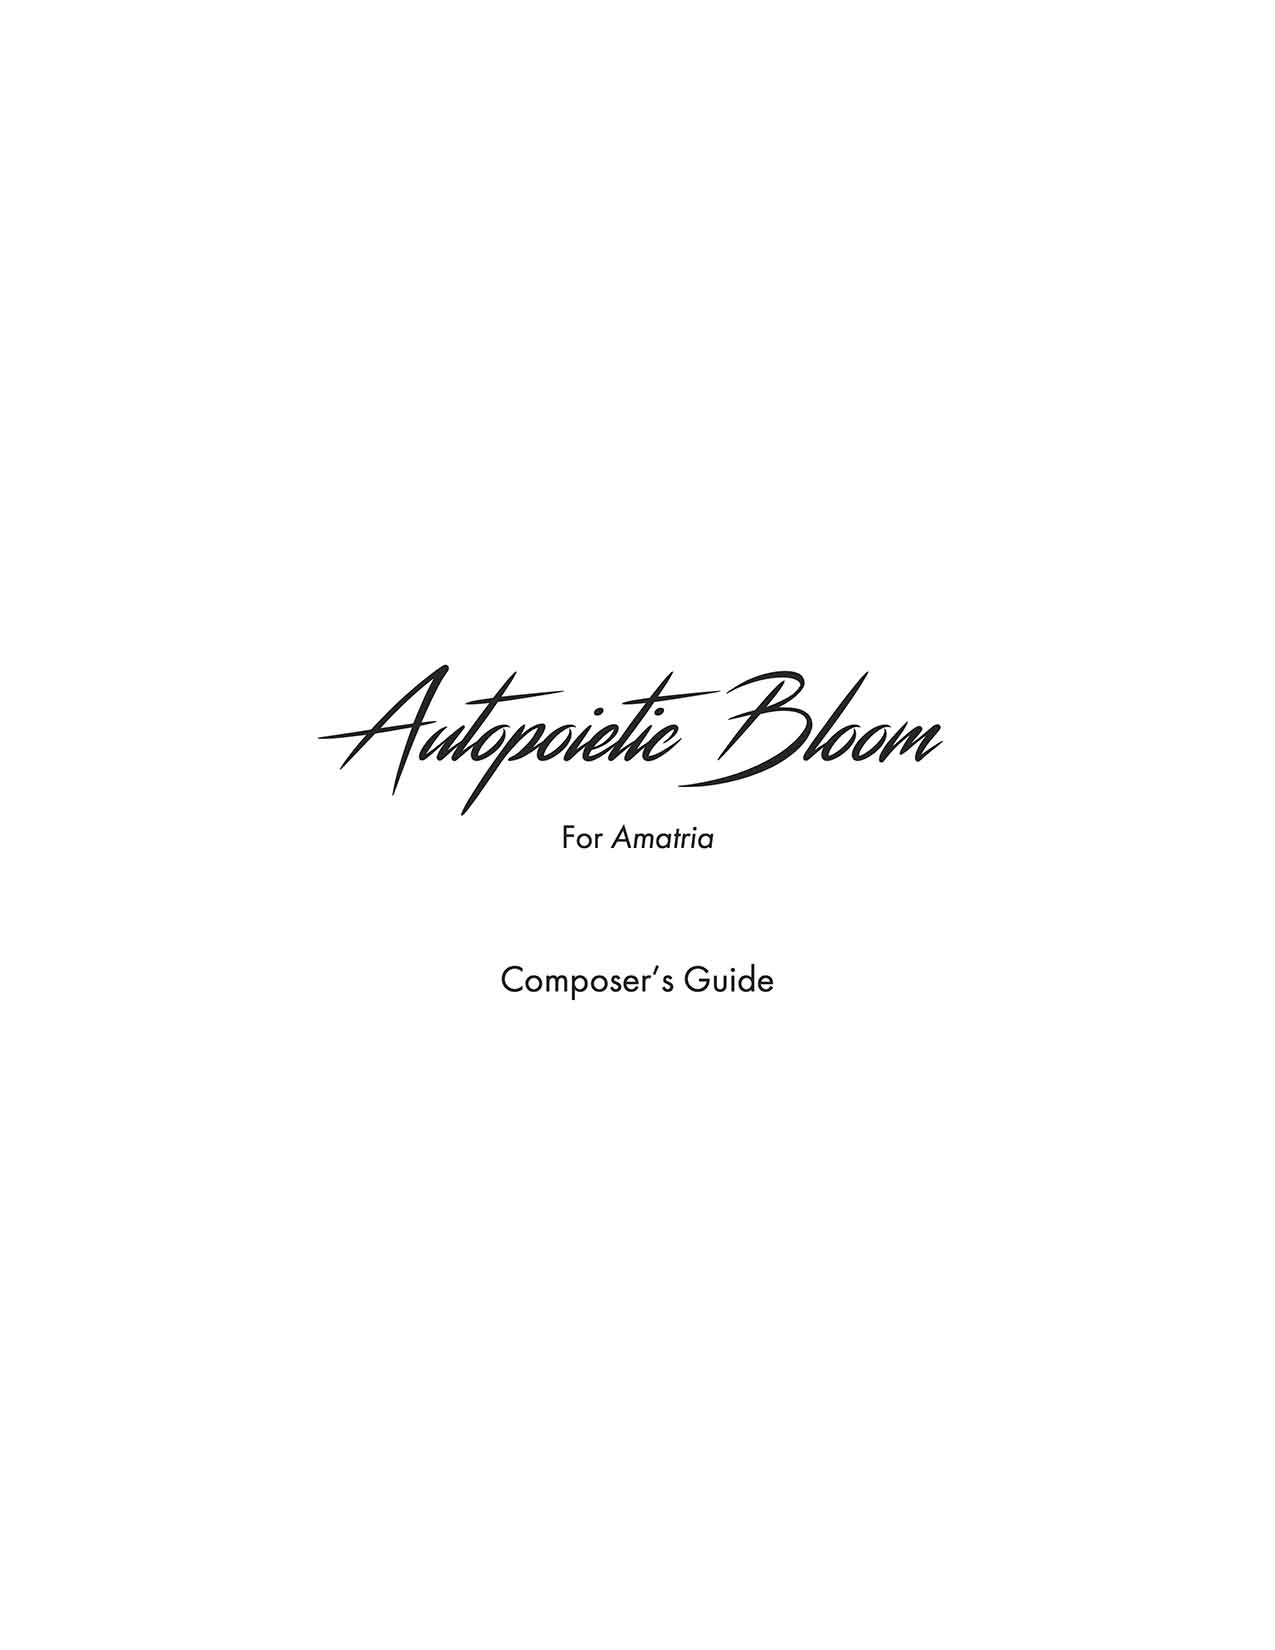 Autopoietic Bloom Composer's Guide